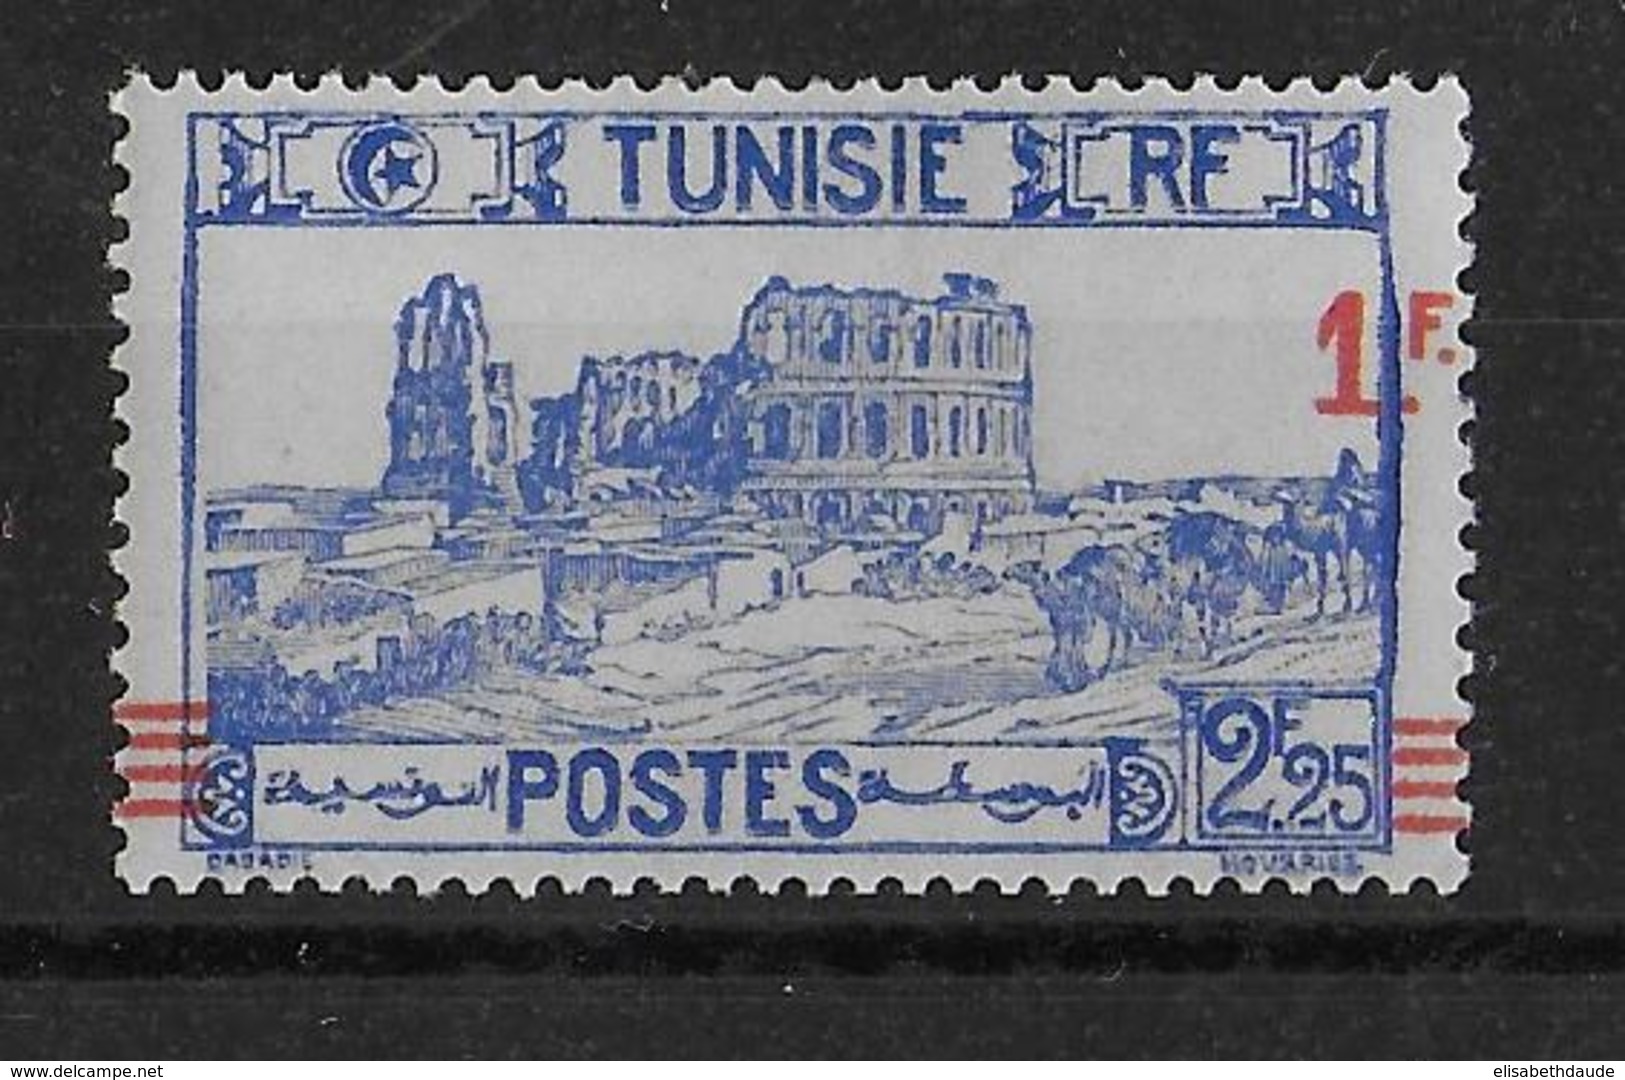 TUNISIE - 1940 - YVERT N° 226 VARIETE SURCHARGE à CHEVAL ** MNH - COTE MAURY = 55 EUR. - Unused Stamps